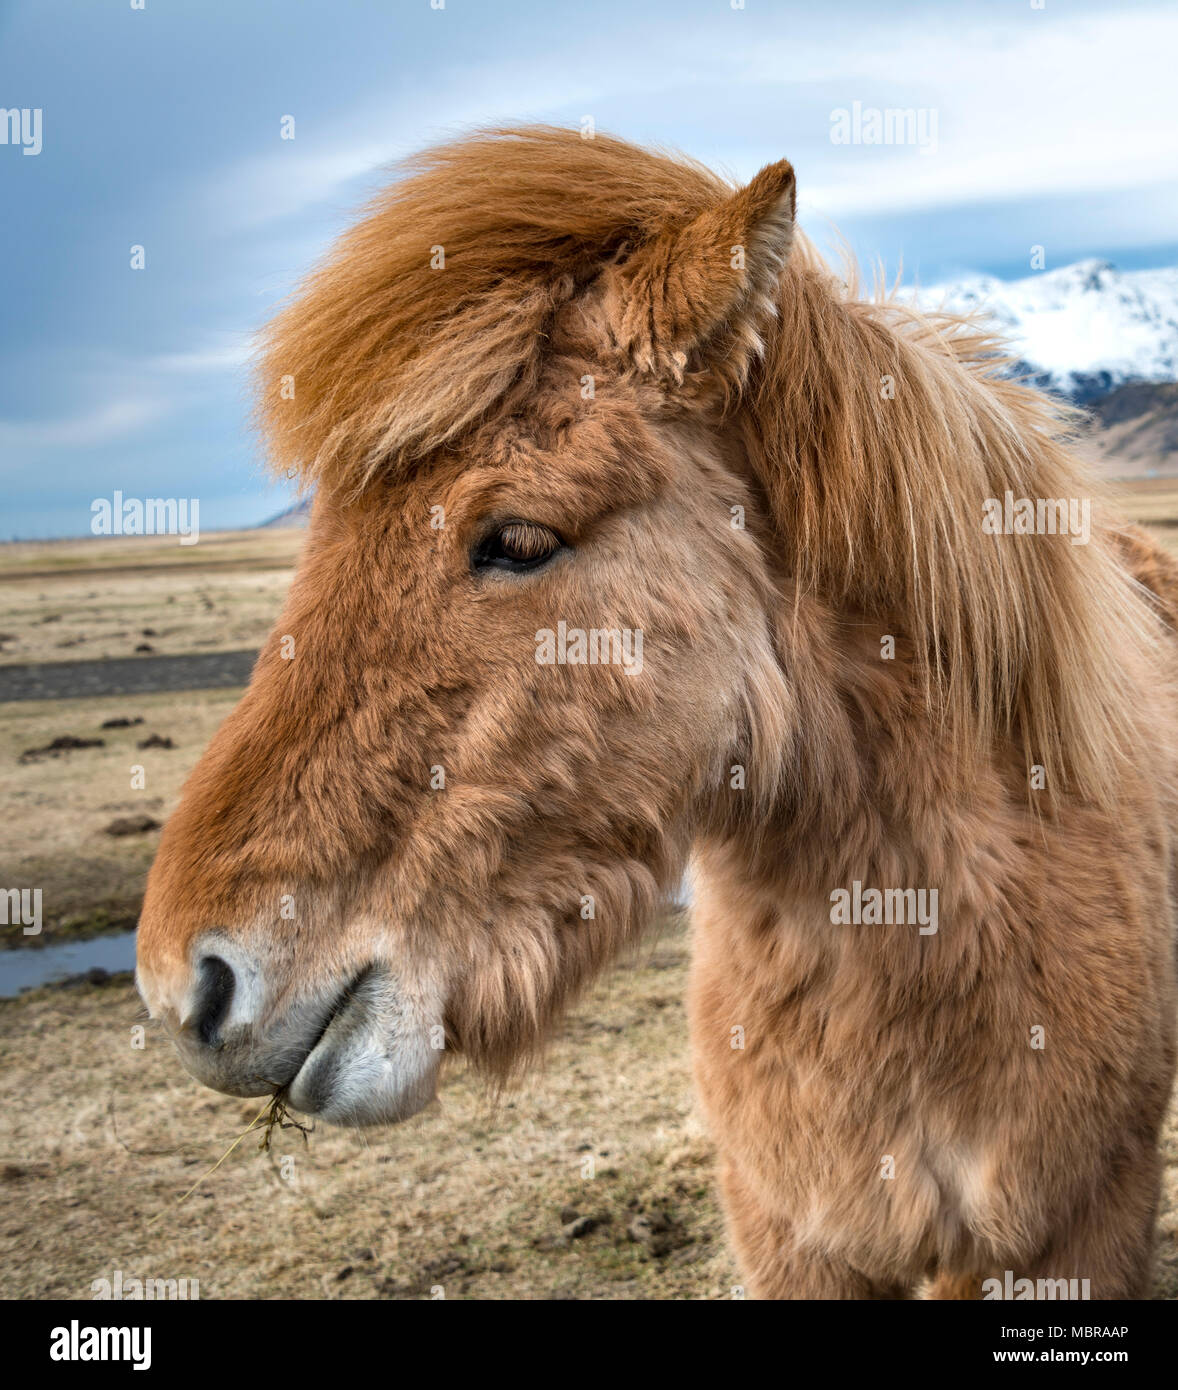 Cheval islandais (Equus islandicus), animal portrait, le sud de l'Islande, Islande Banque D'Images